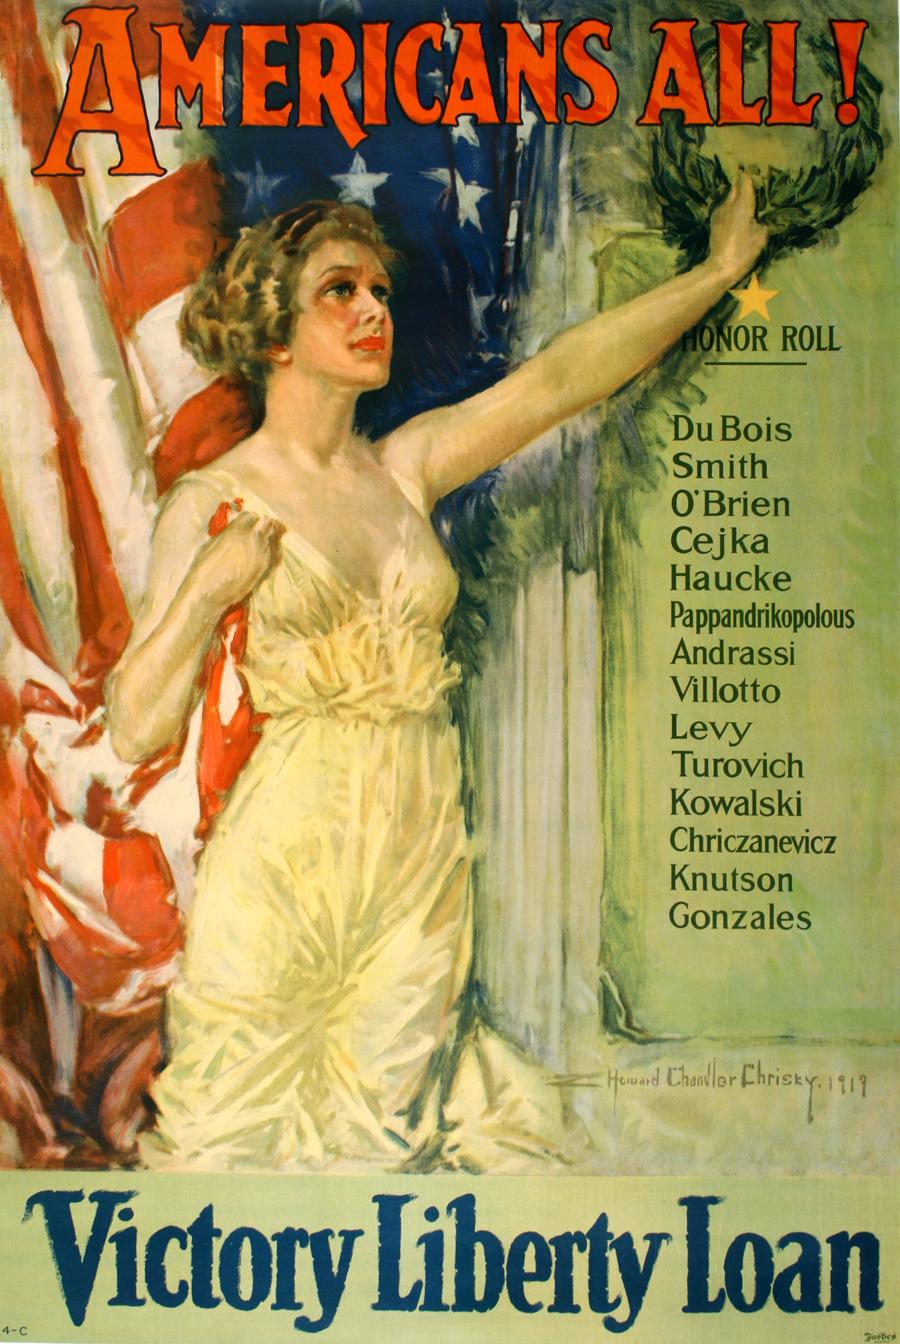 Tous les Américains ! Victory Liberty Loan Original Vintage WWI Poster by Christy 1919